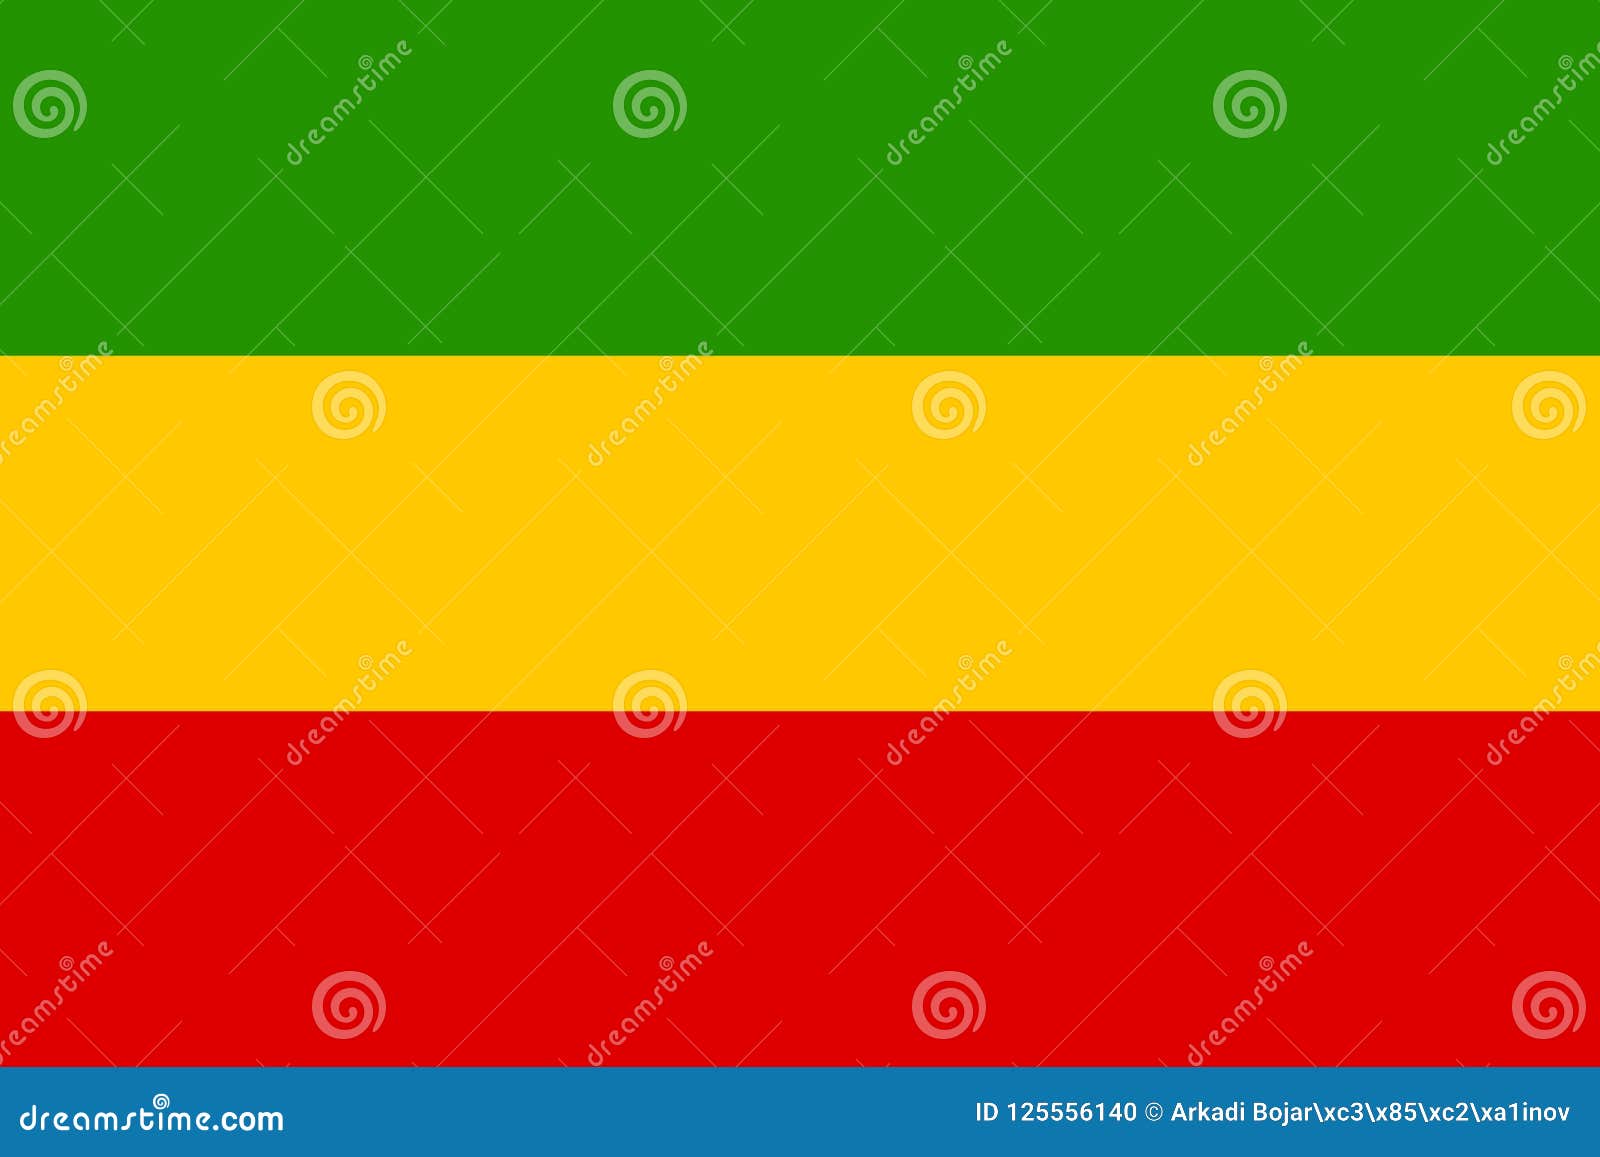 rastafari tricolor flag